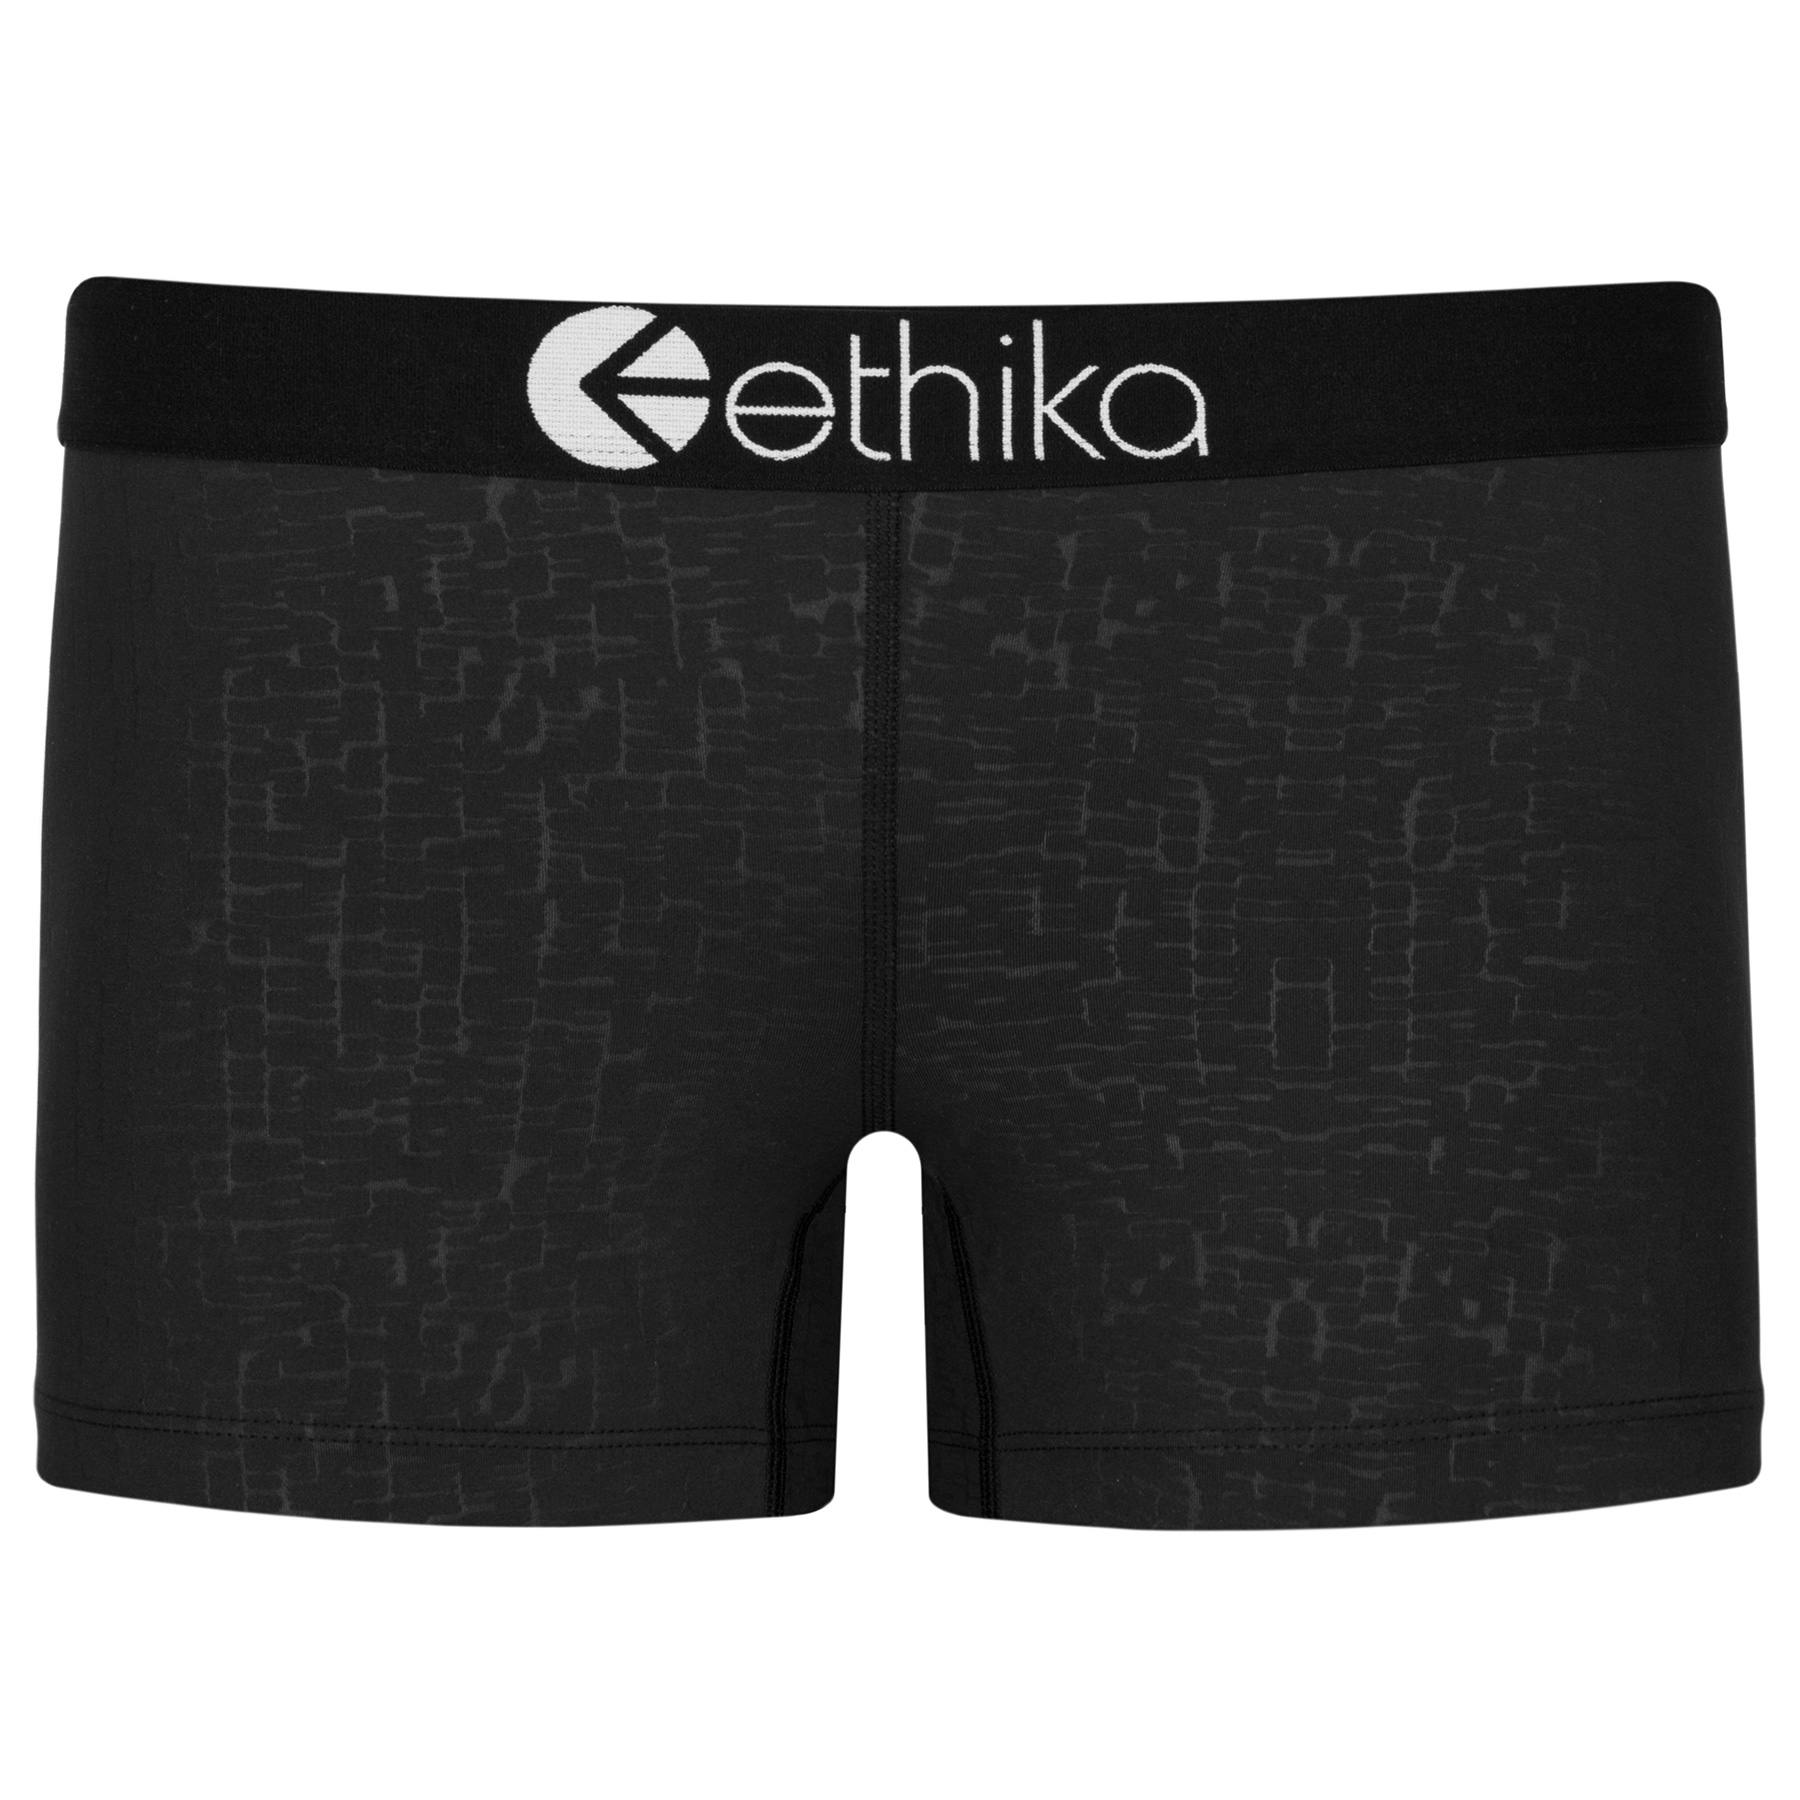 Ethika | Ethika - With You Everywhere